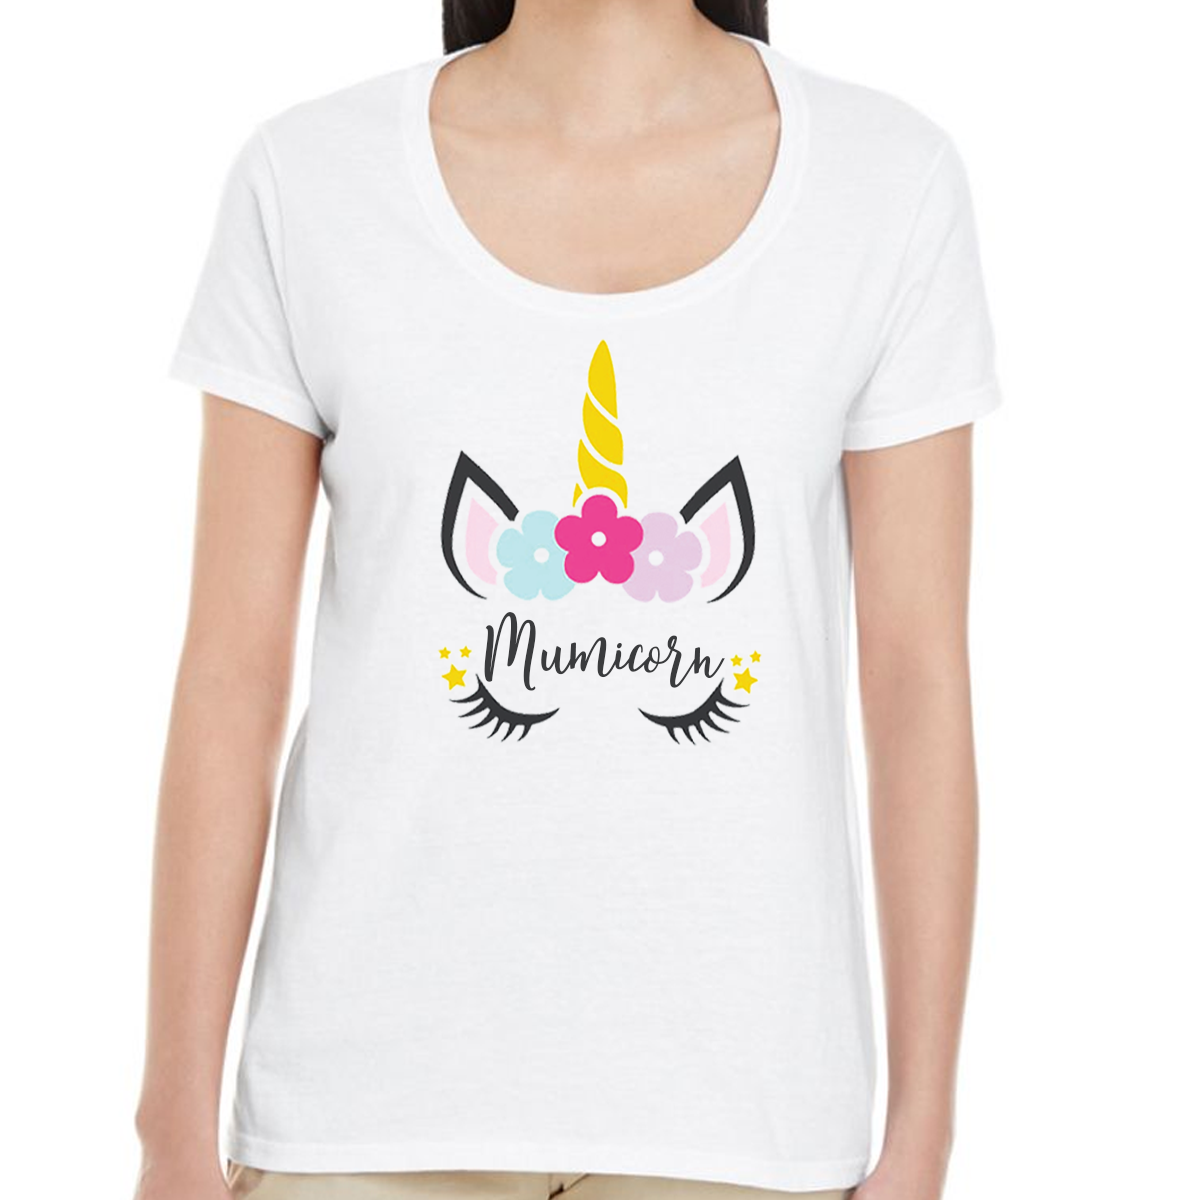 Mumicorn Unicorn Ladies scoop neck fitted white t-shirt - Personalised options!